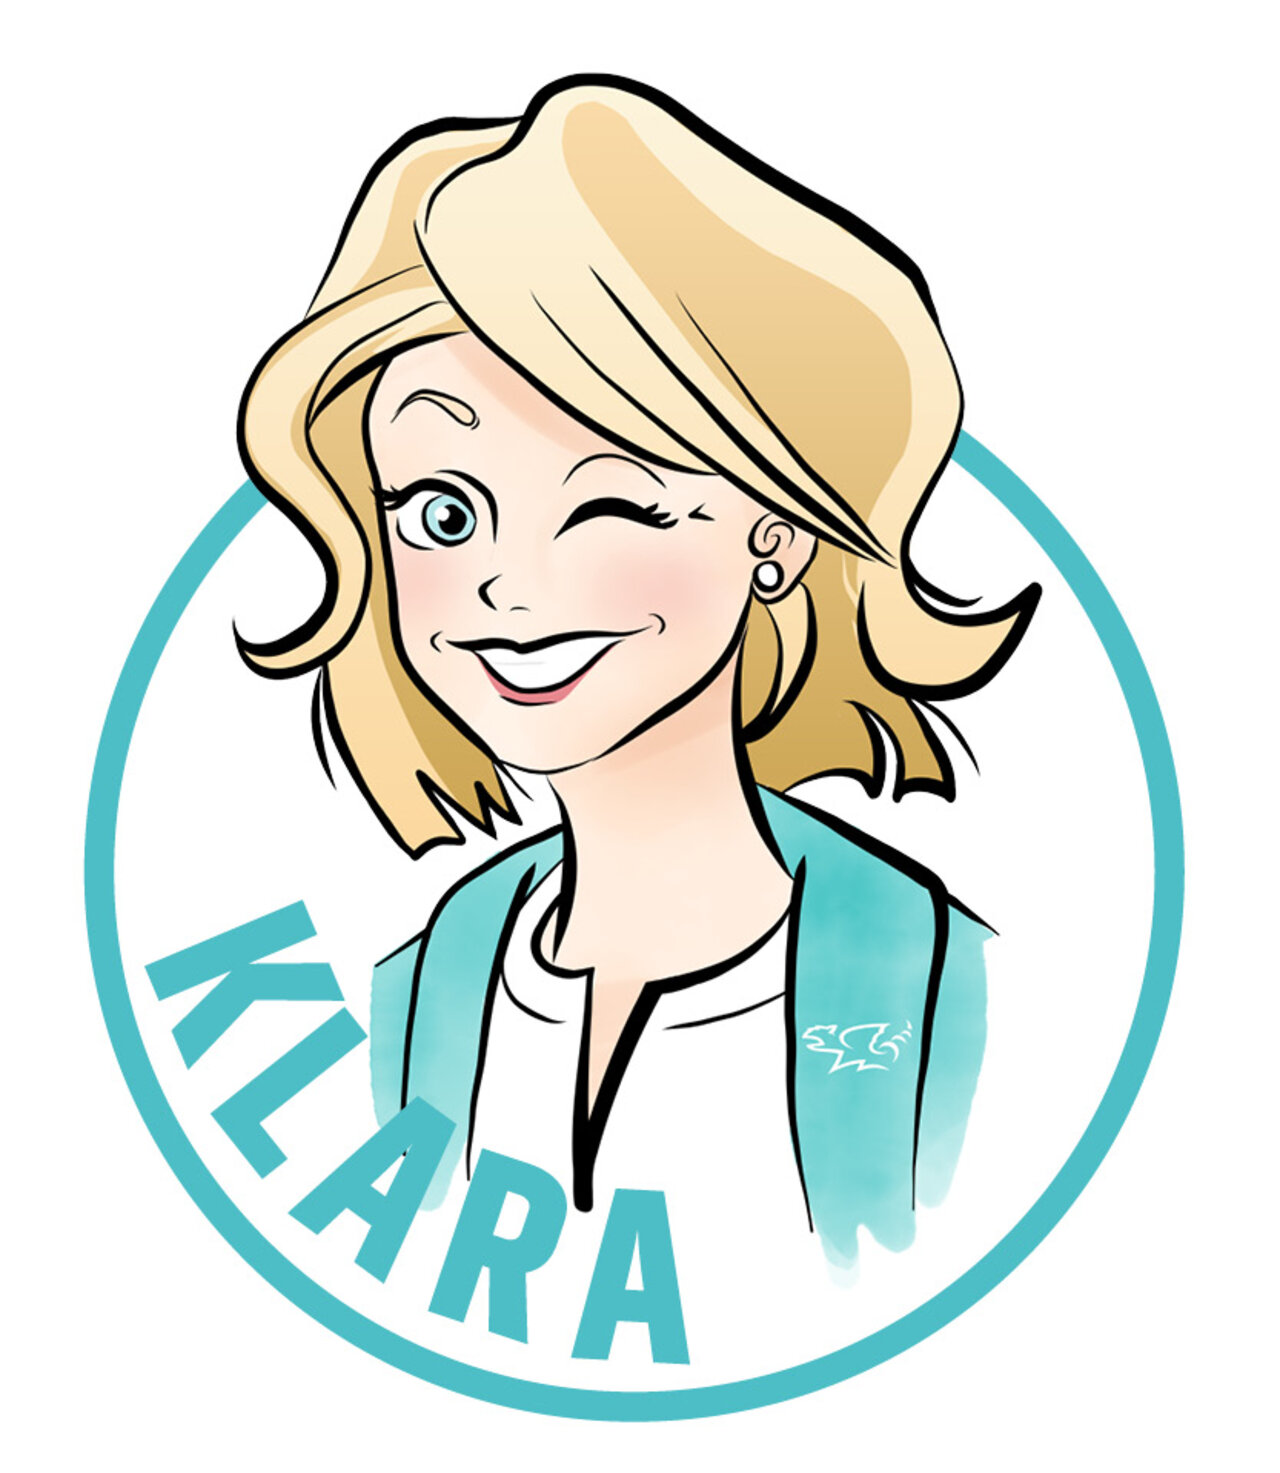 KLARA, die digitale Klagenfurter Rathaus Assistentin. Grafik: Major Tom